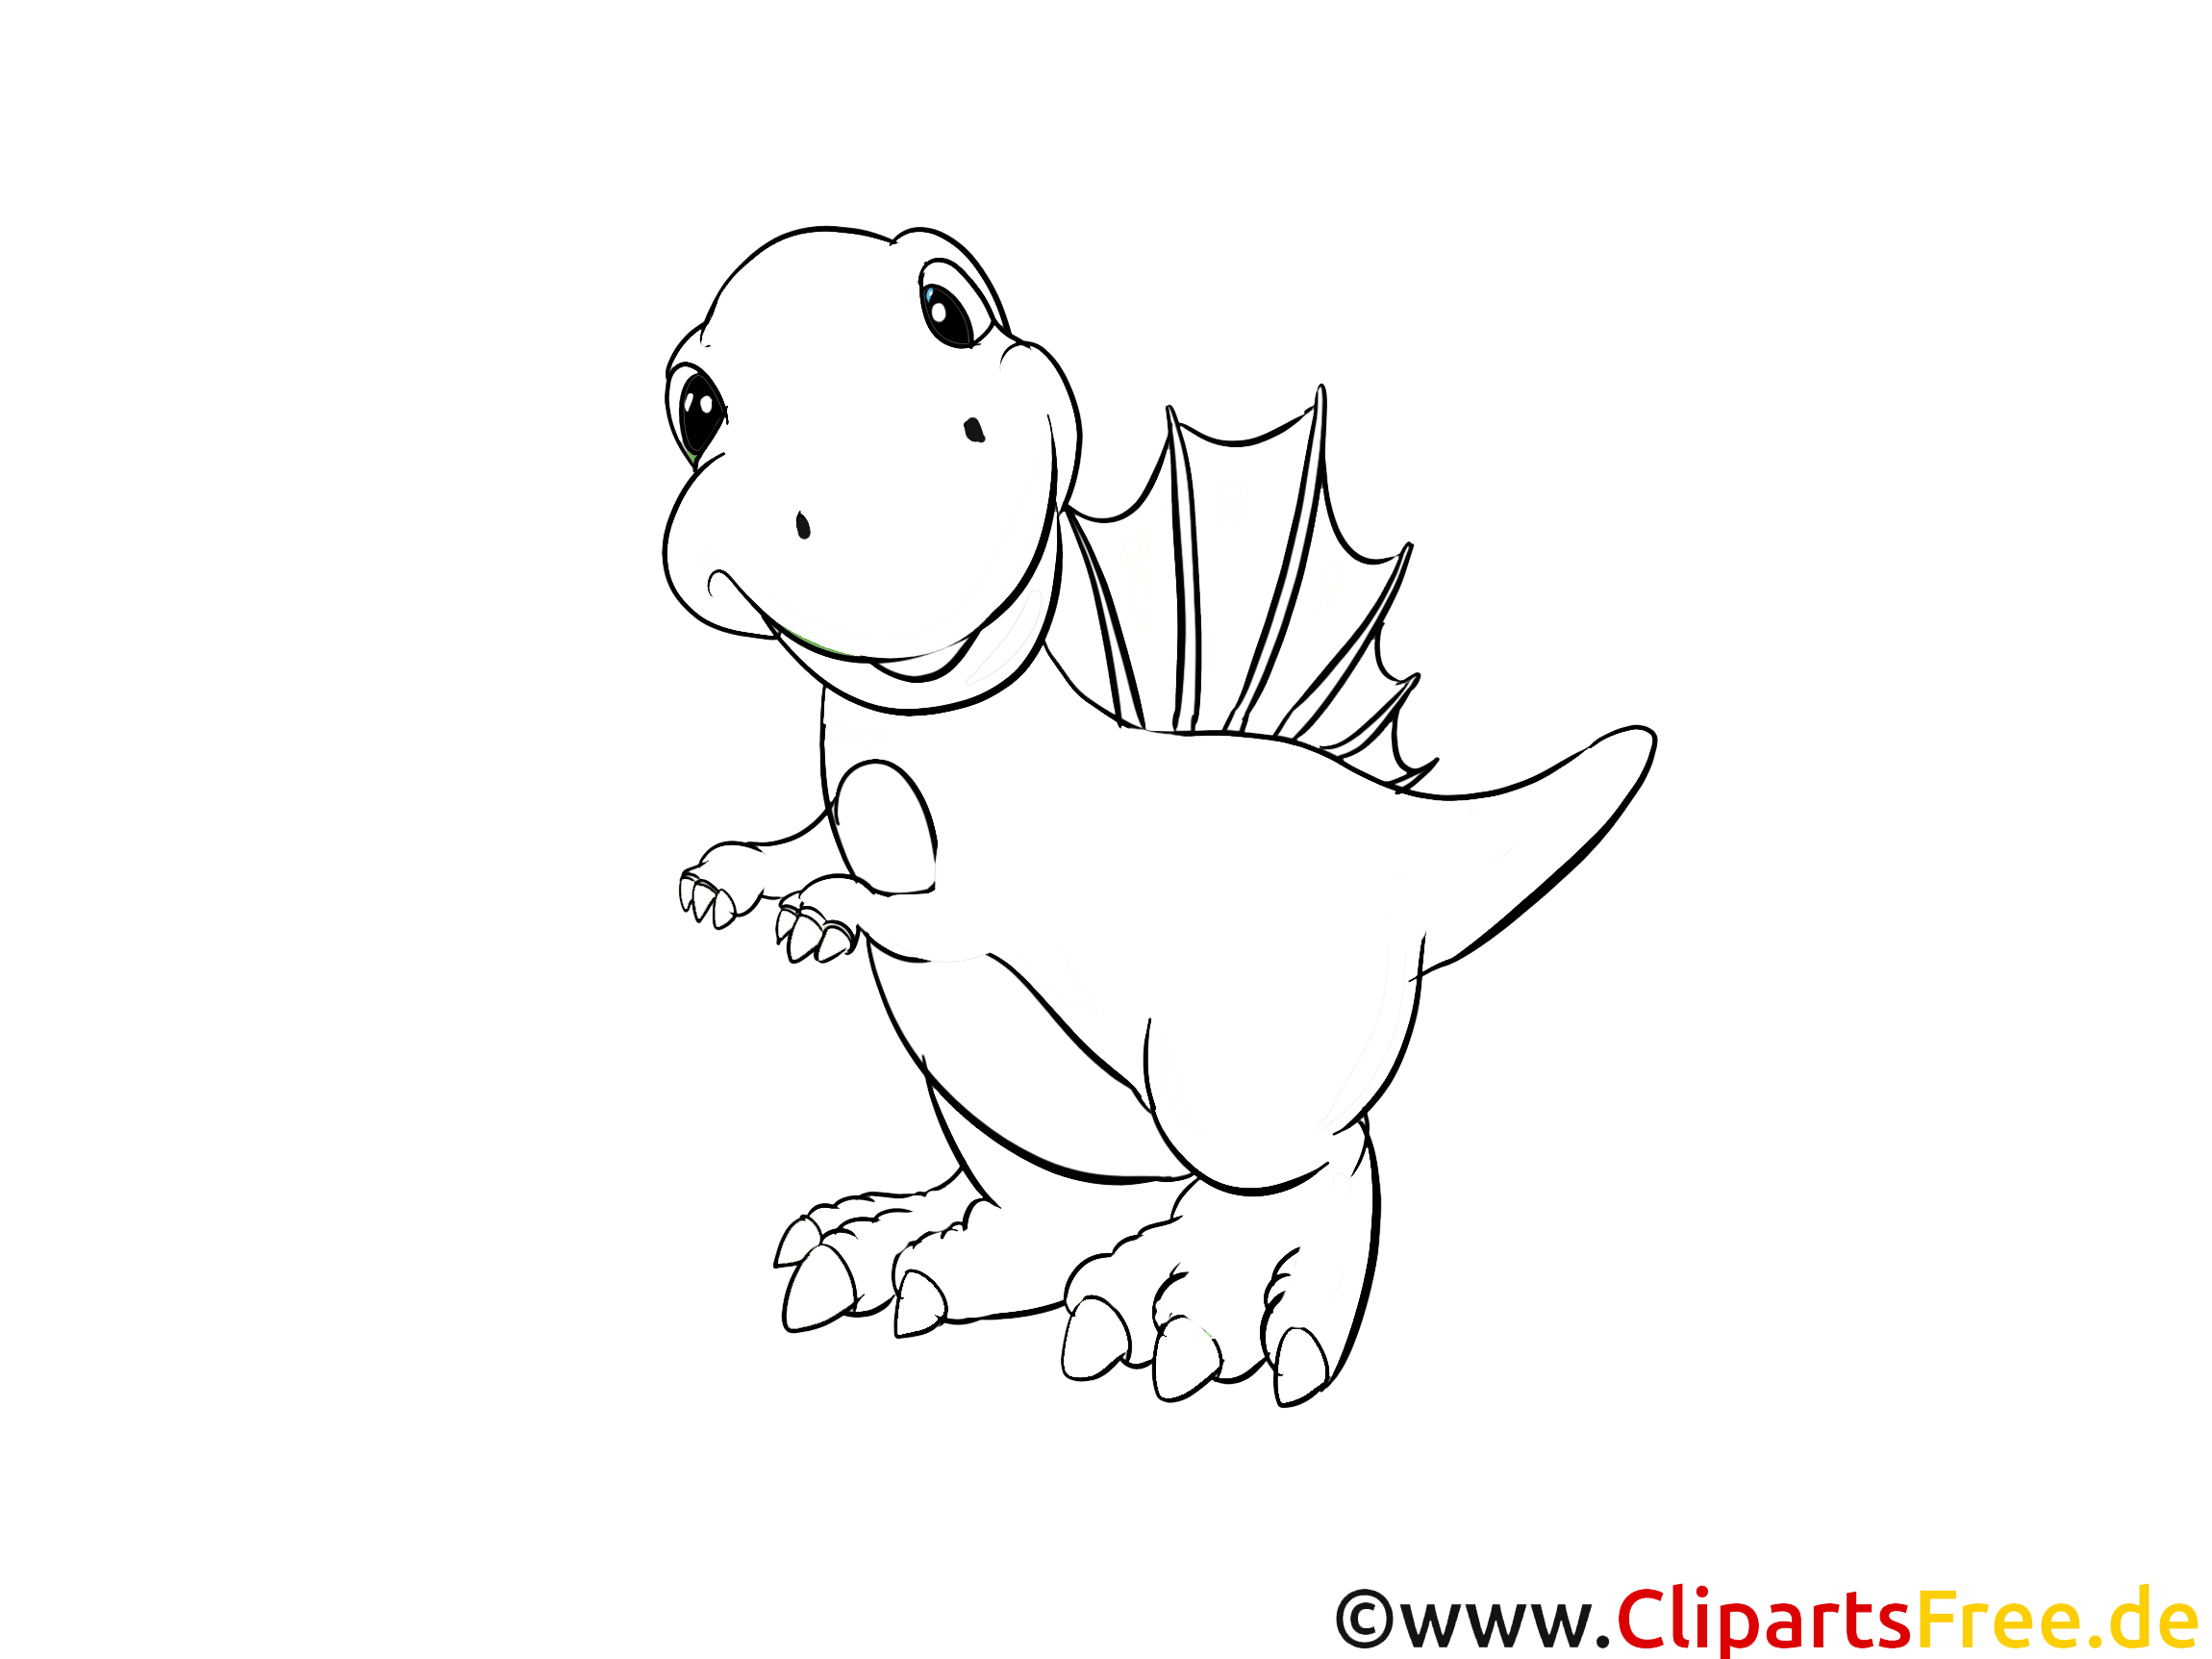 Dinosaurios - páginas para colorear para niños